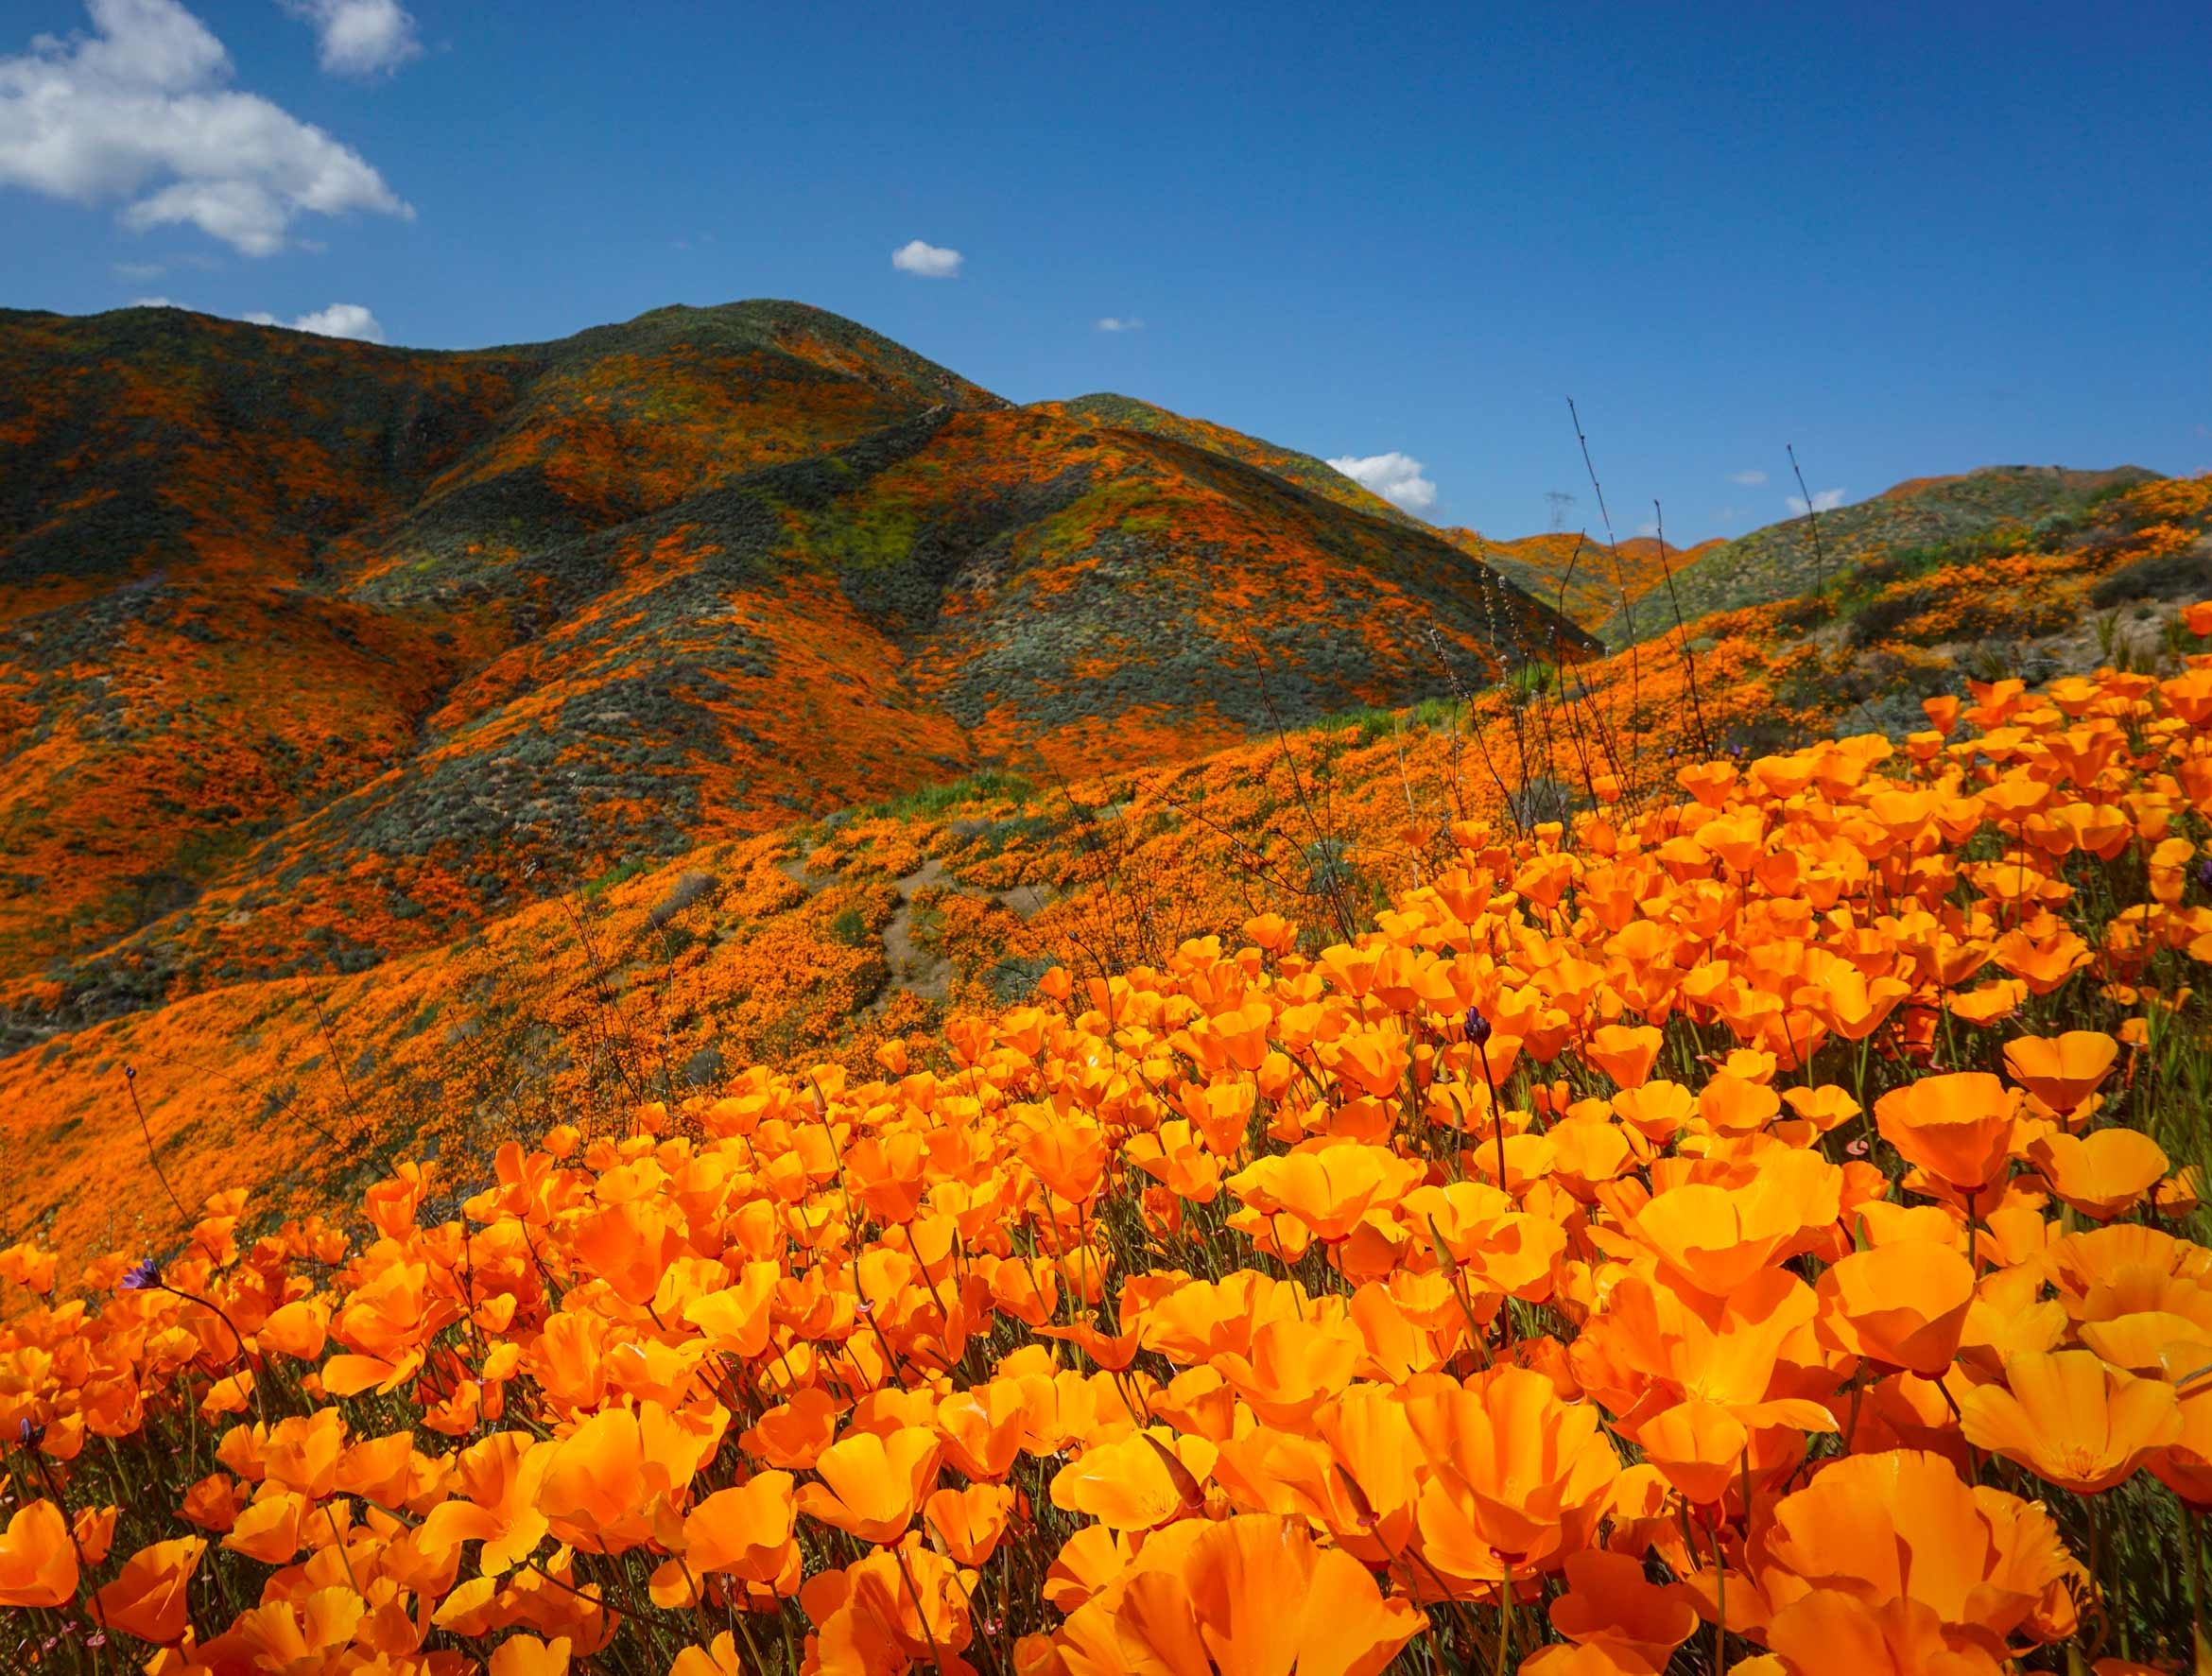 Orange poppies cover the hillsides.